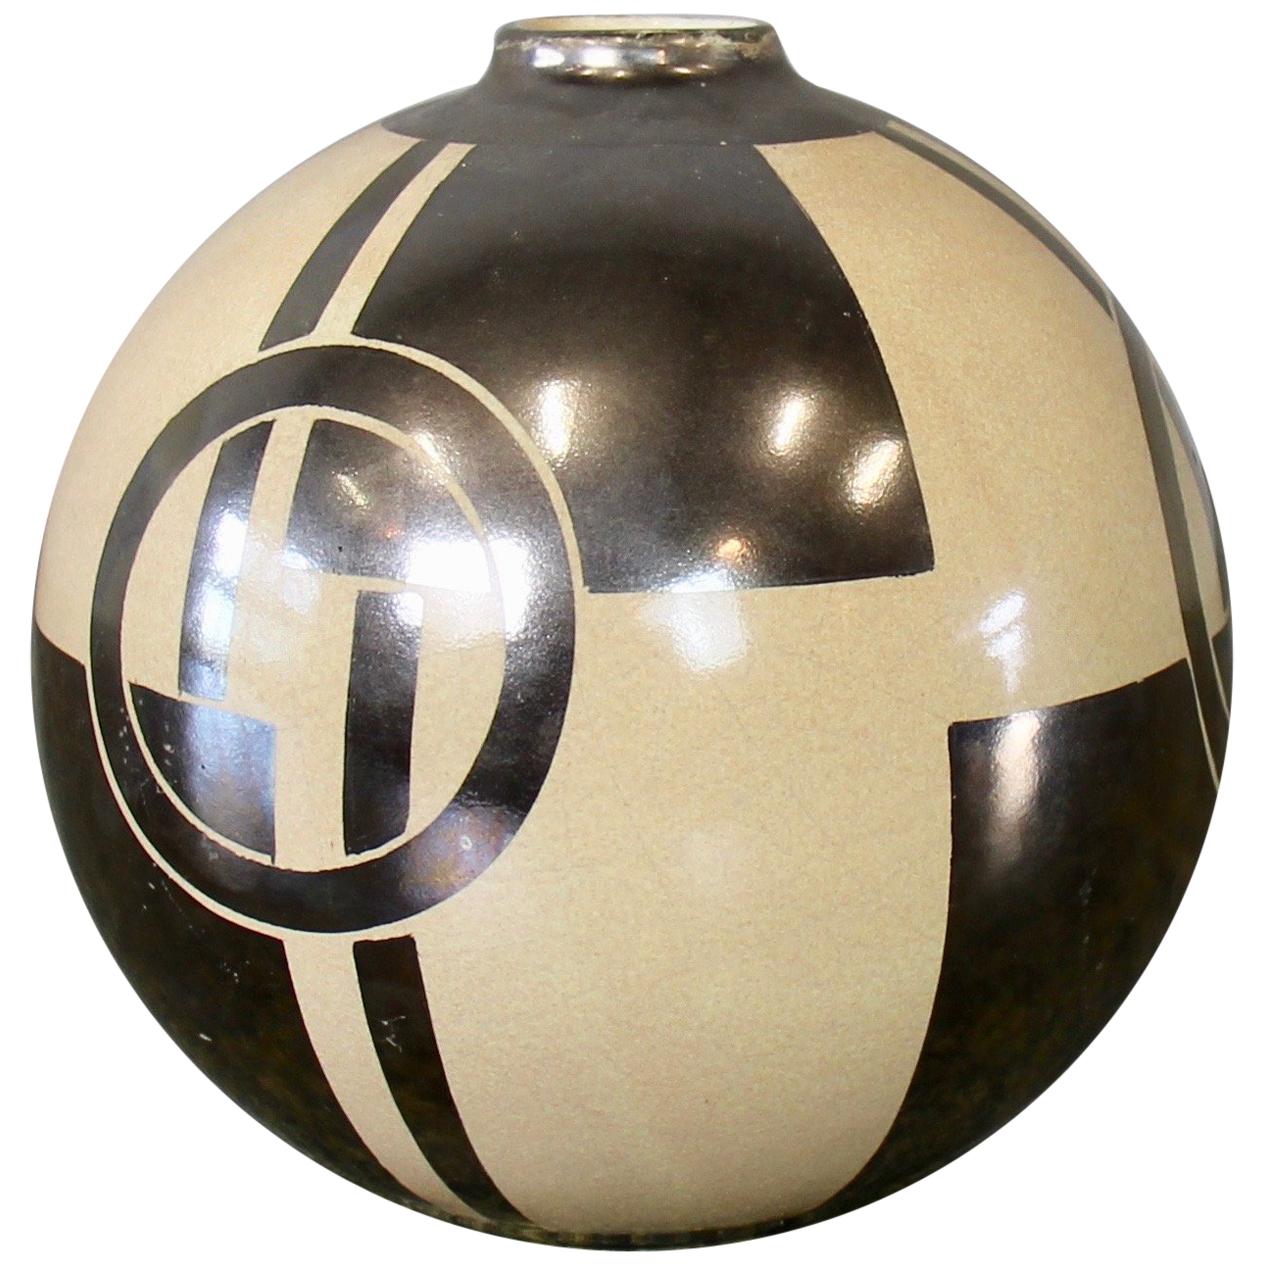 French Art Deco Vase, Ceramic with Geometric Patterns